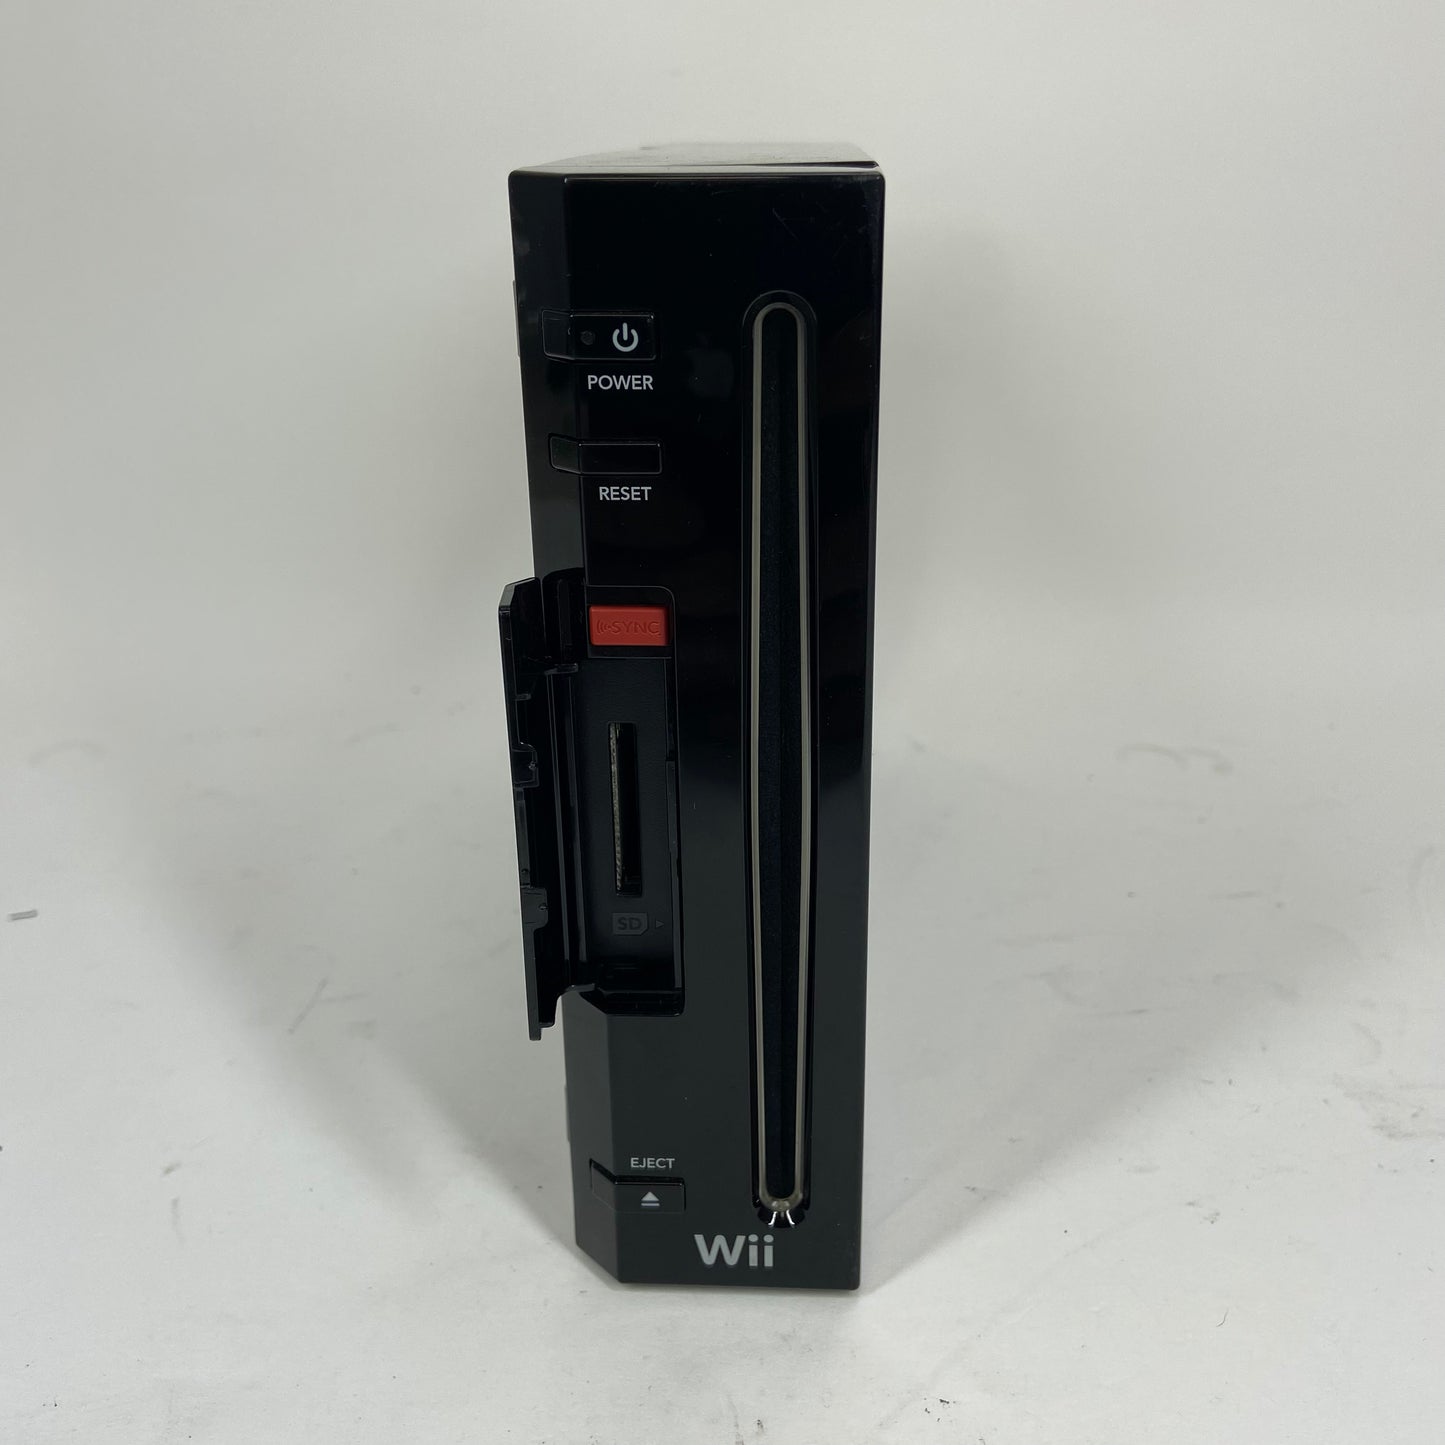 Nintendo Wii Video Game Console RVL-001 White